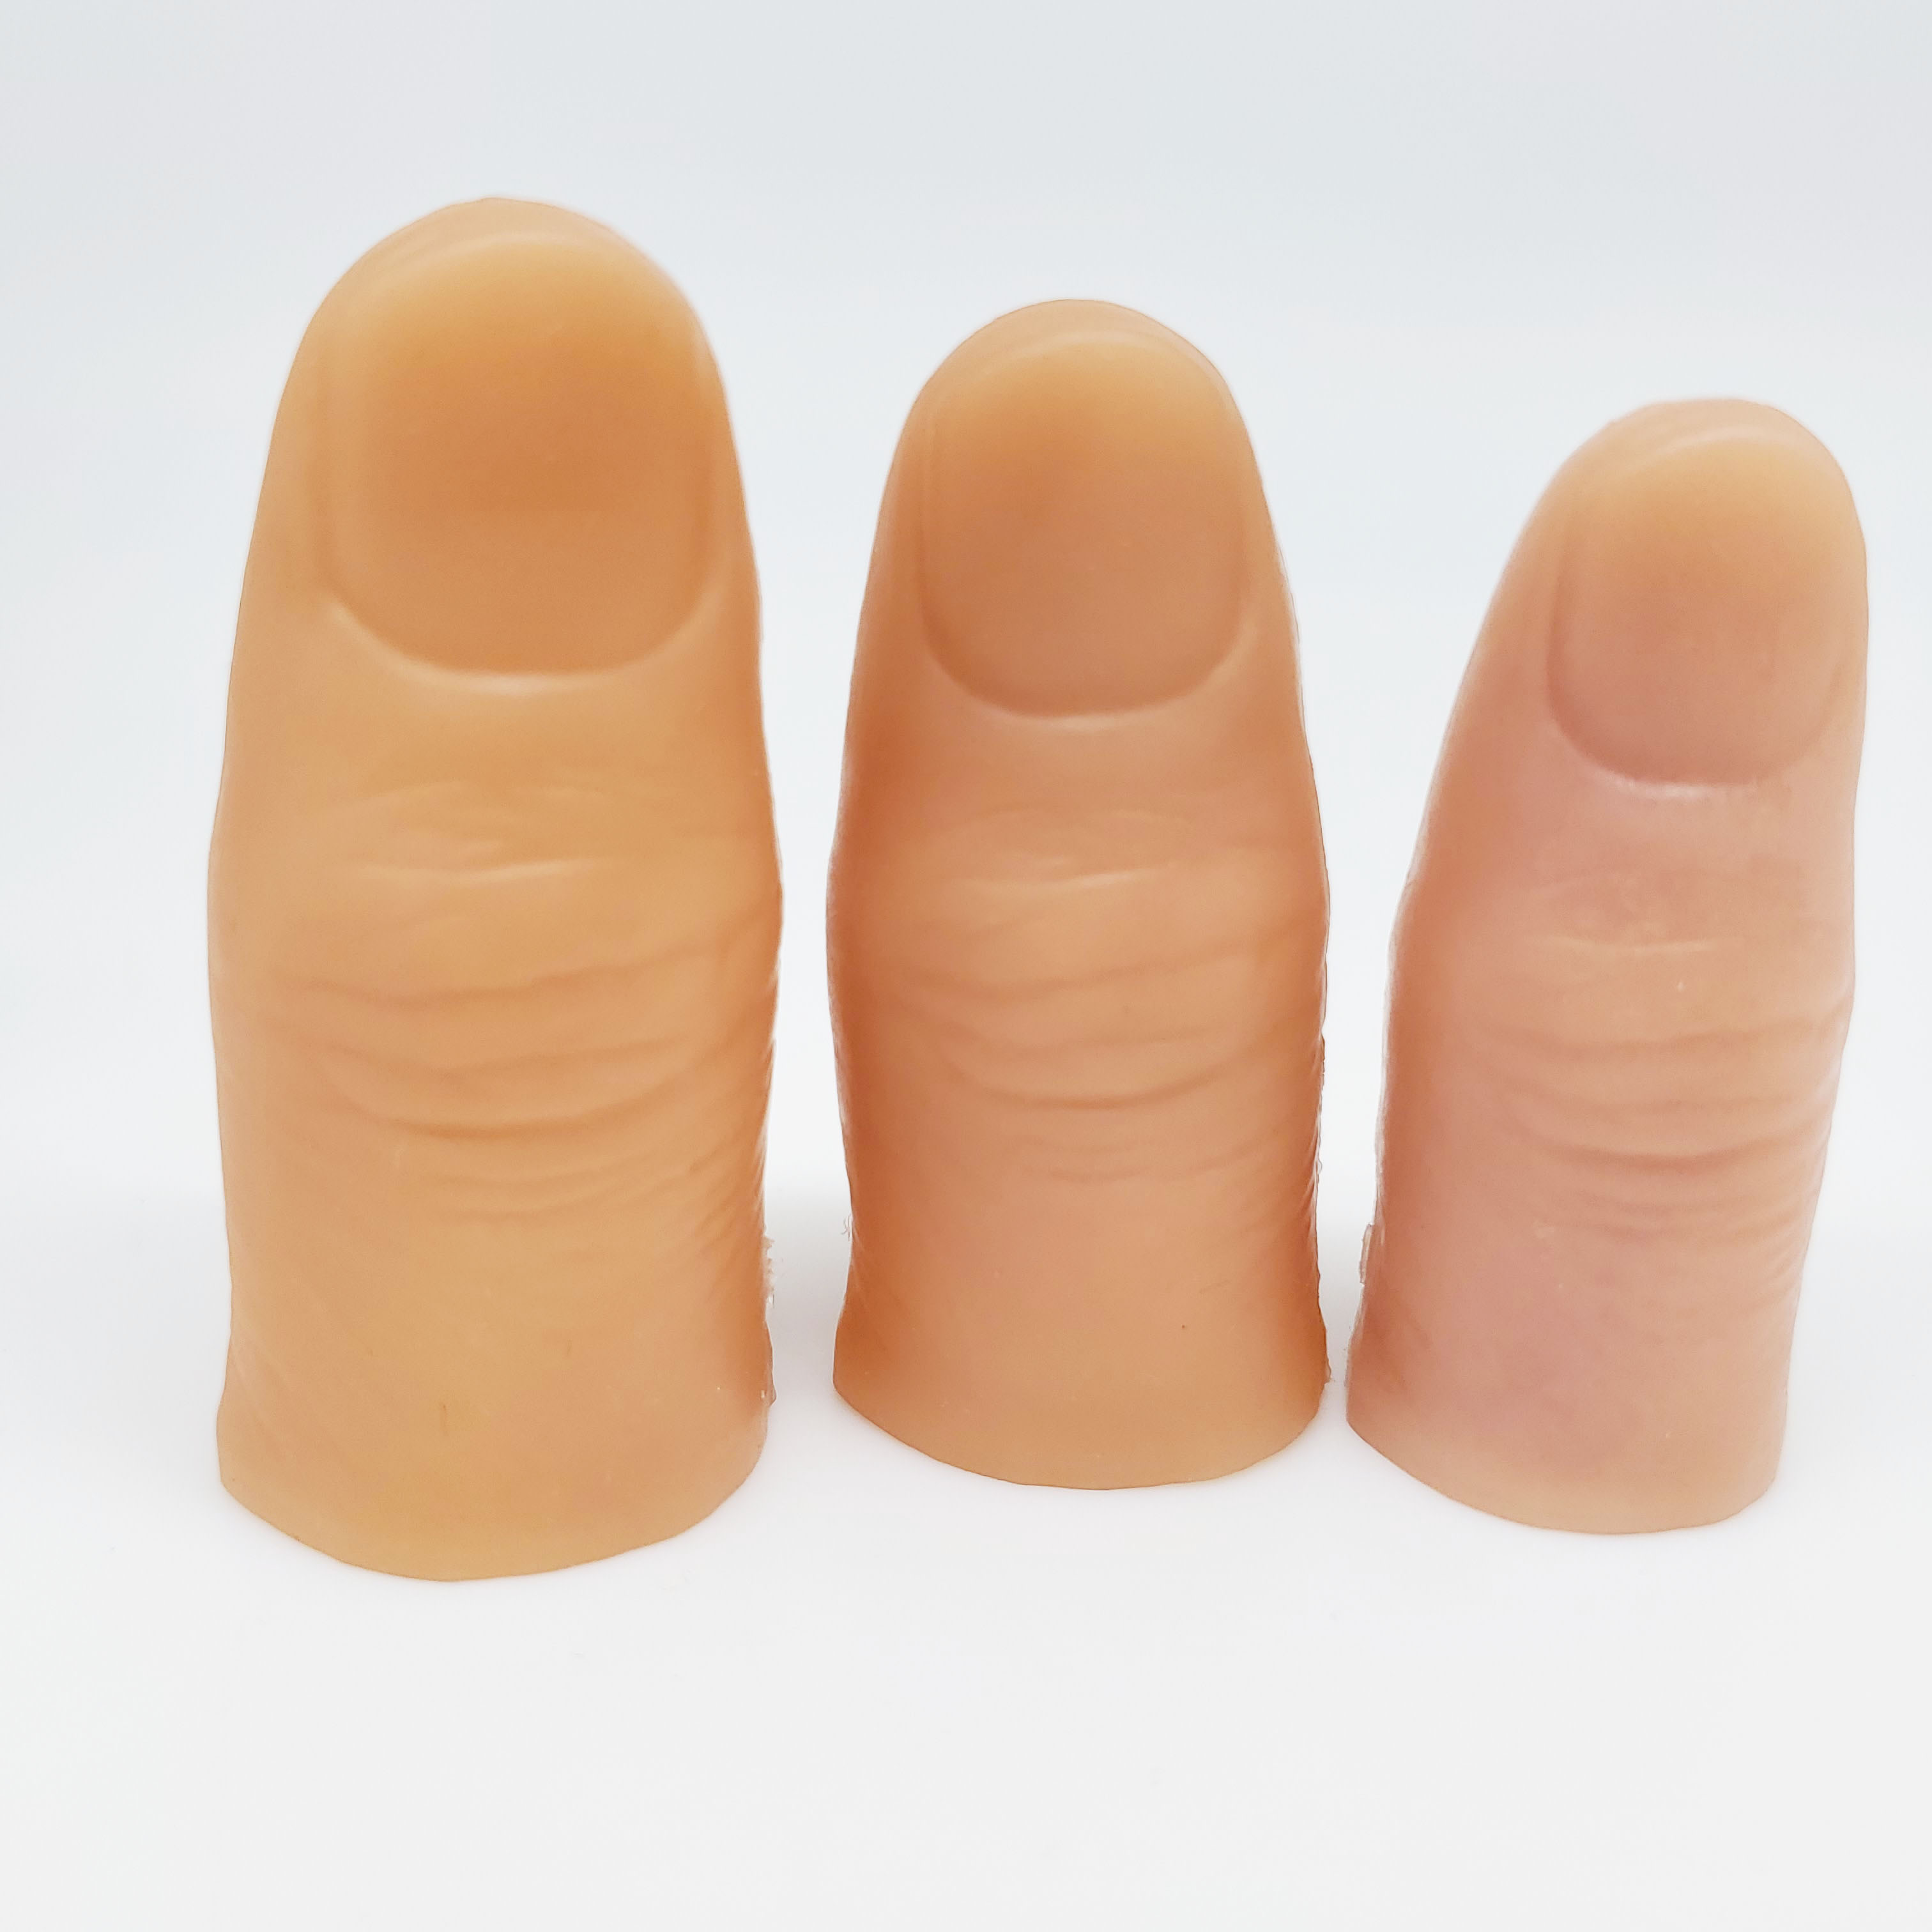 Simulation Thumb Tip (Large)